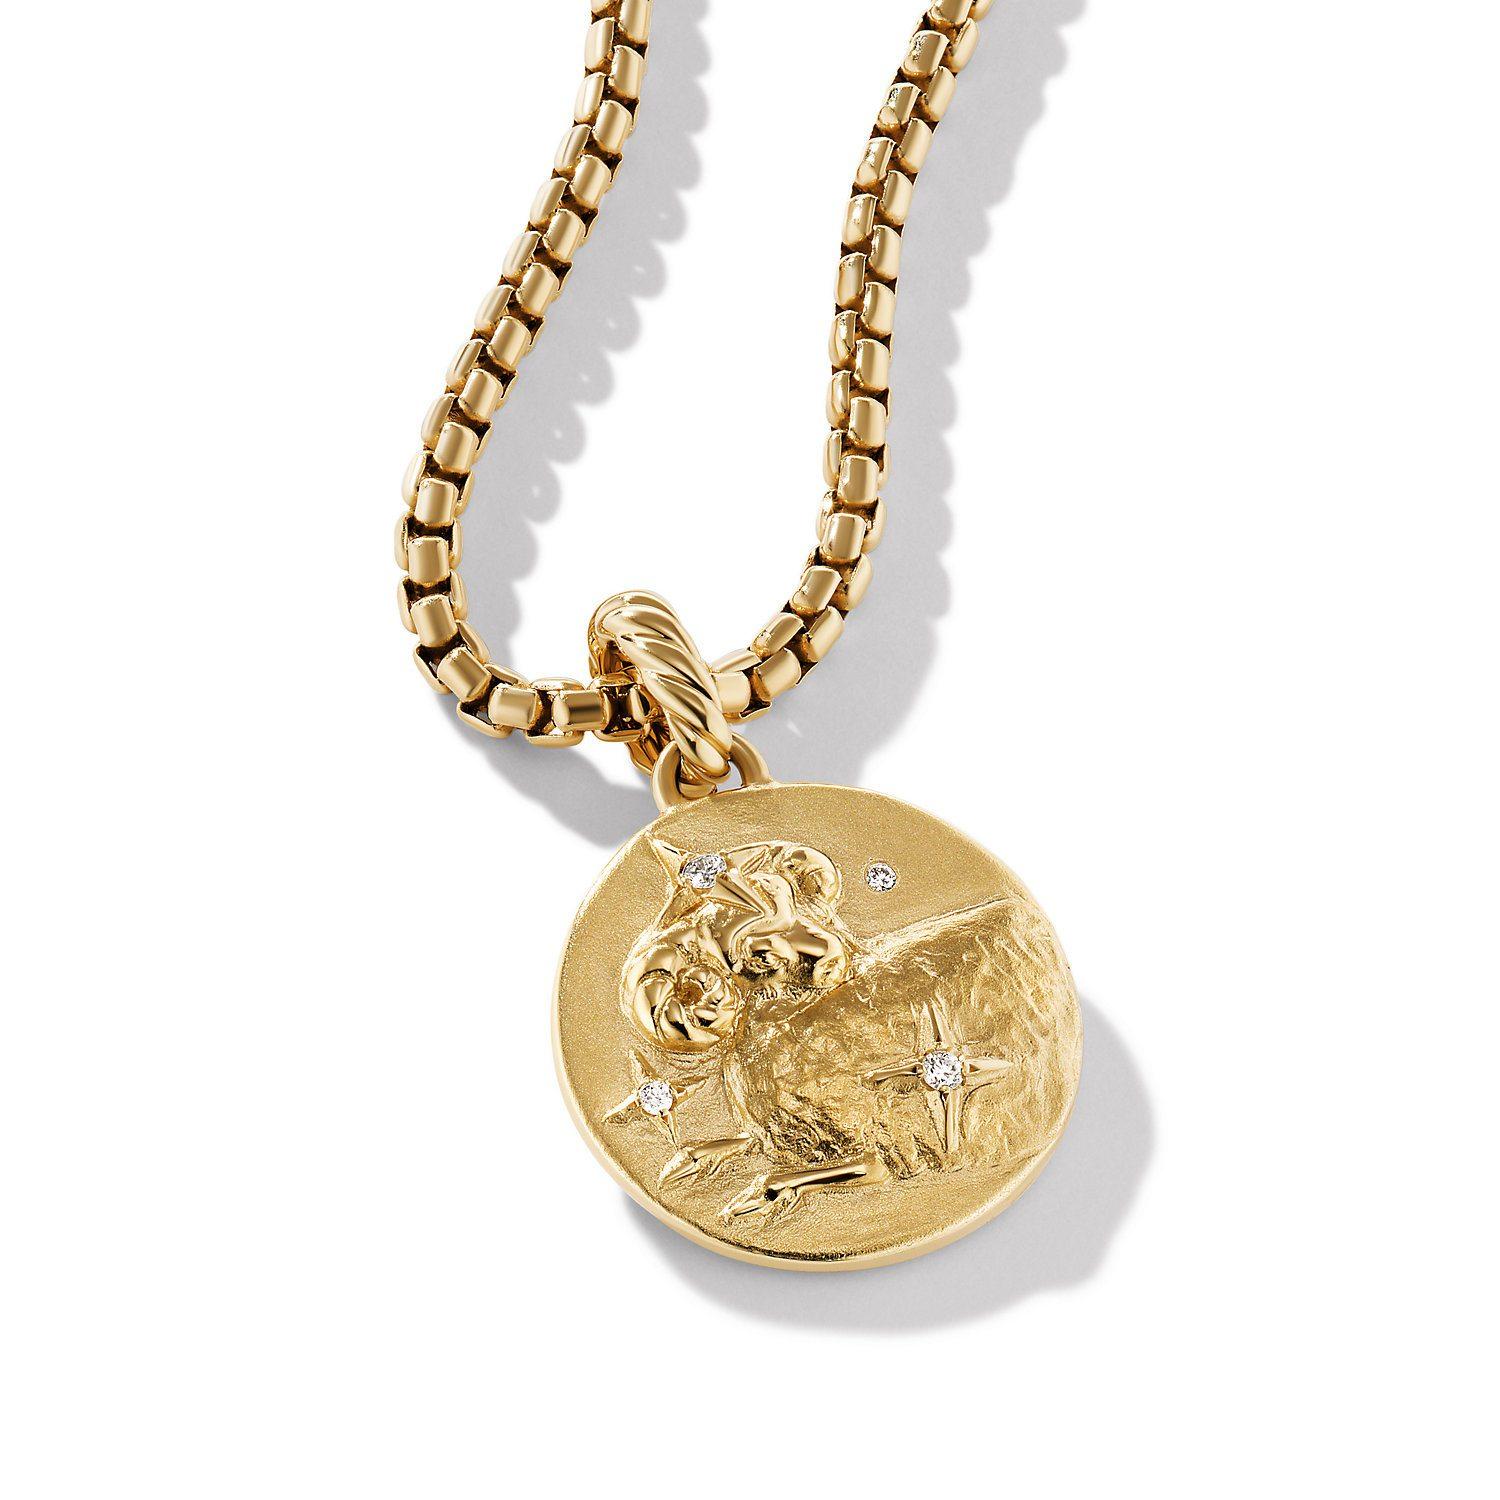 David Yurman Aries Amulet in 18K Yellow Gold with Diamonds